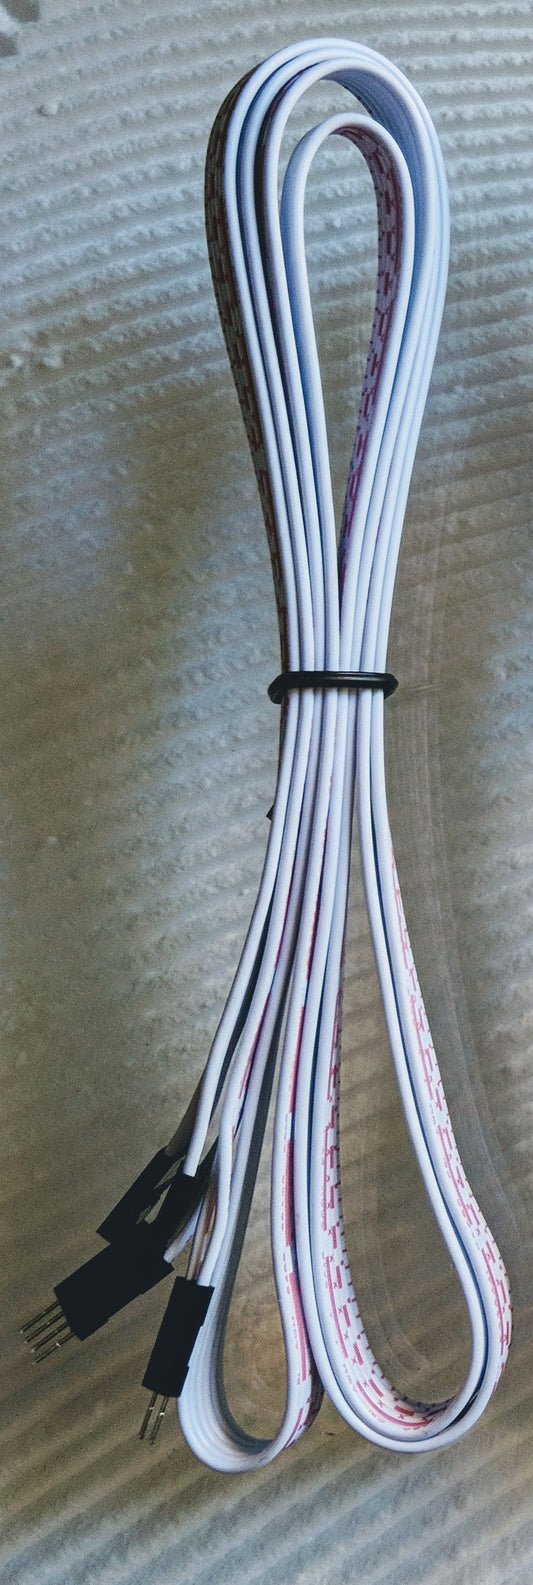 Stepper extender wires.